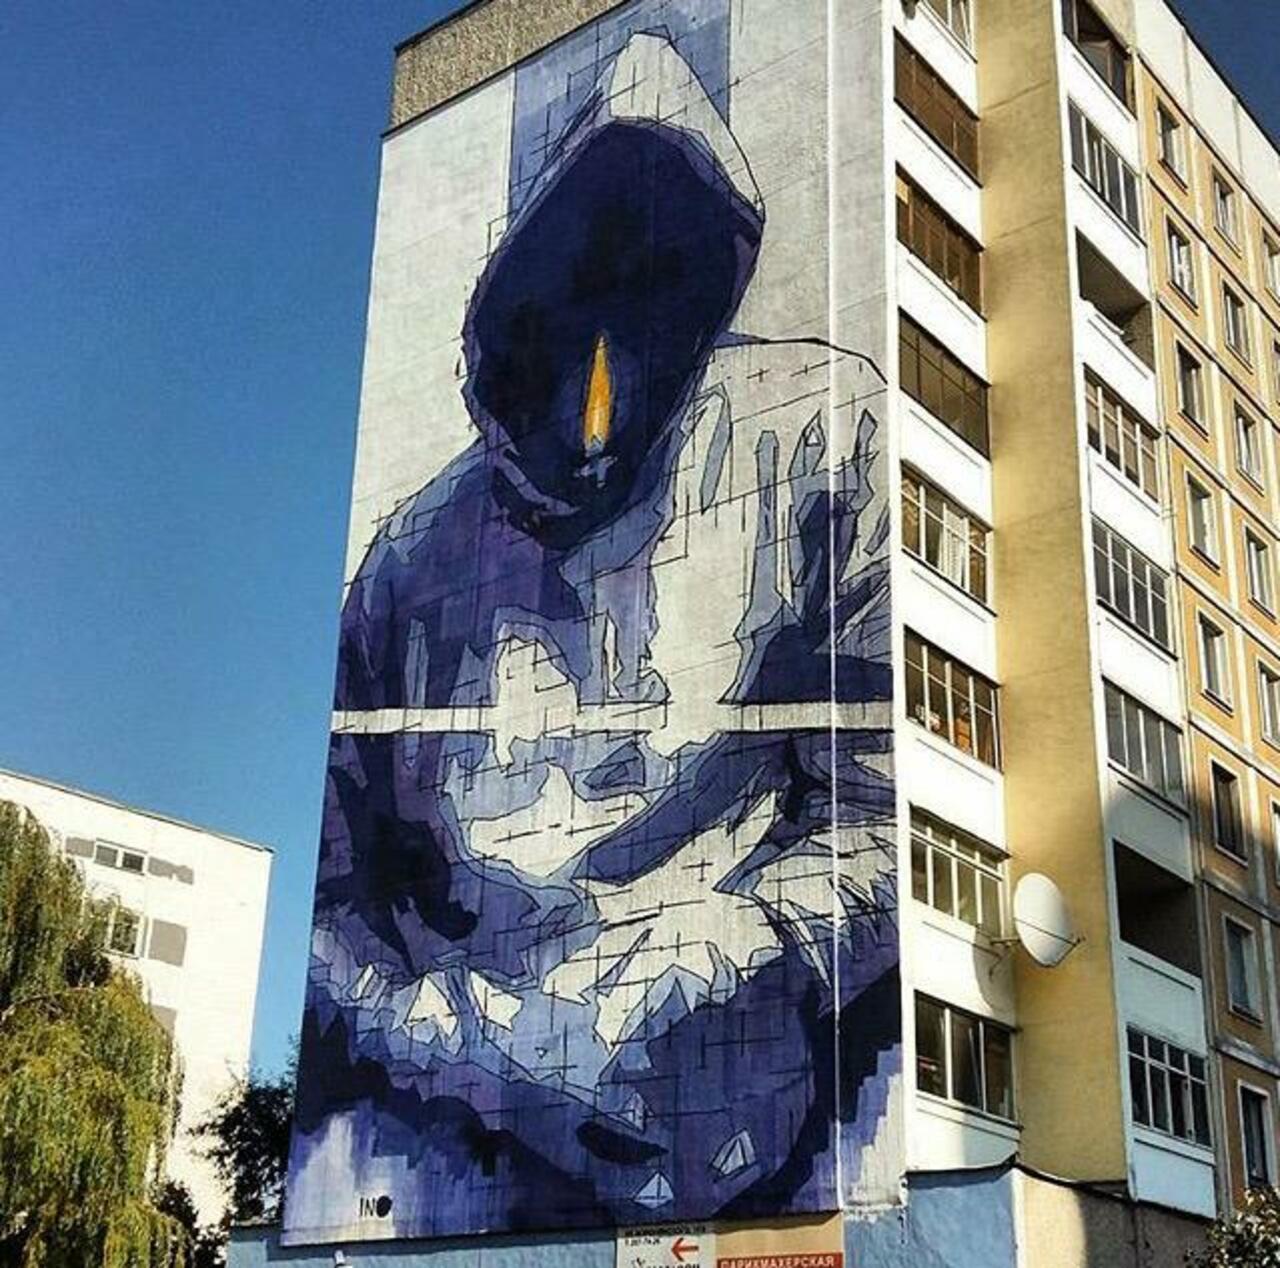 'Man With No Name' 
New Street Art by iNO in Minsk, Belarus 

#art #graffiti #mural #streetart http://t.co/NA40AiiBsT